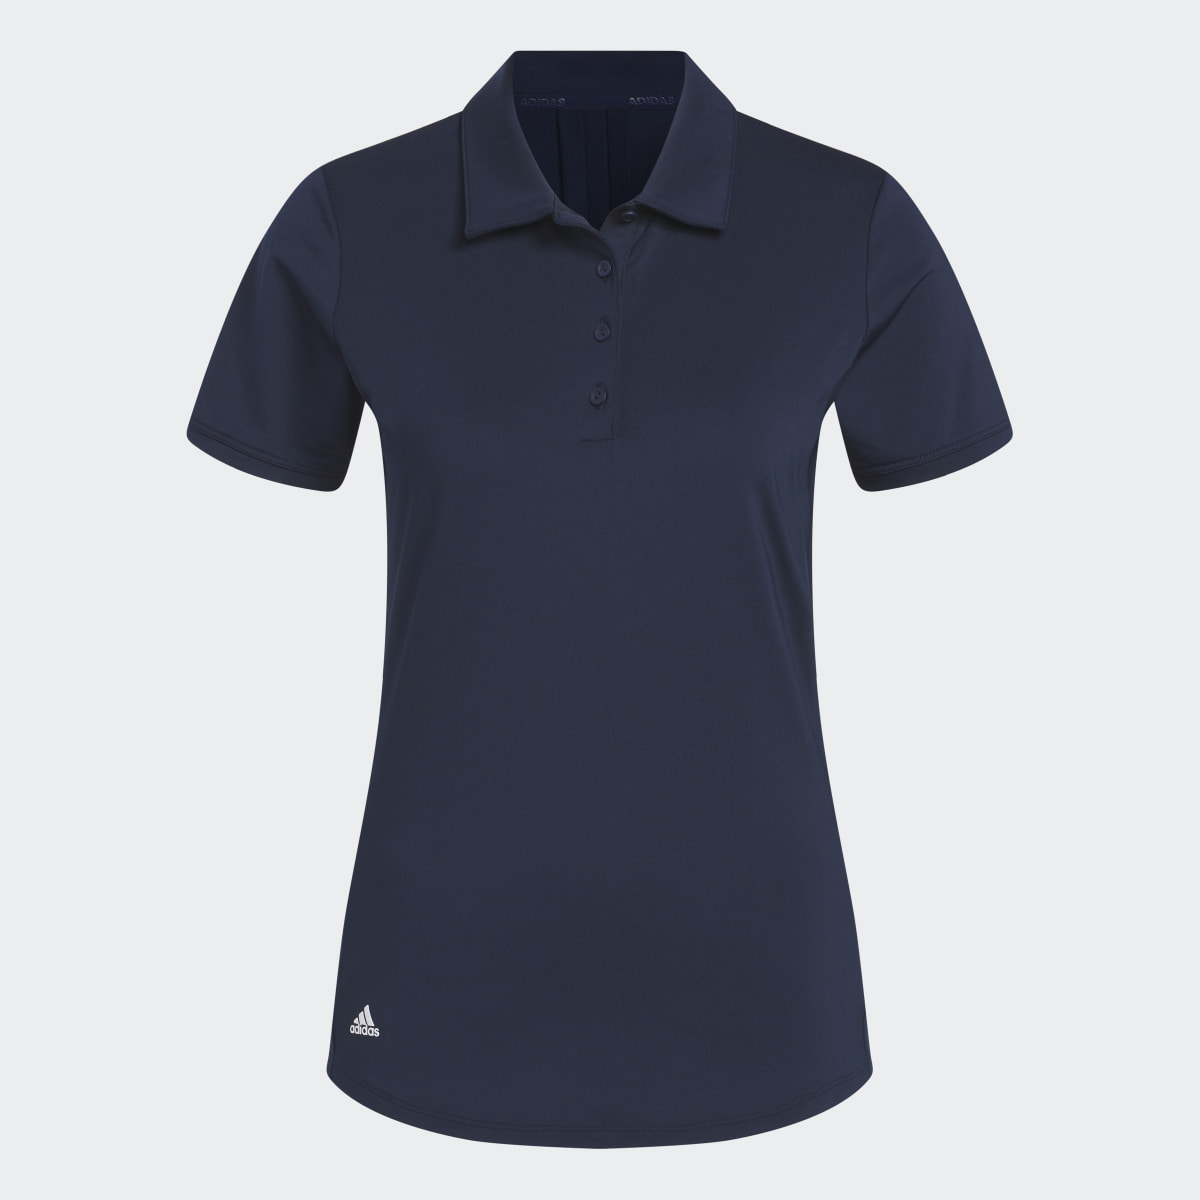 Adidas Ultimate365 Solid Polo Shirt. 5